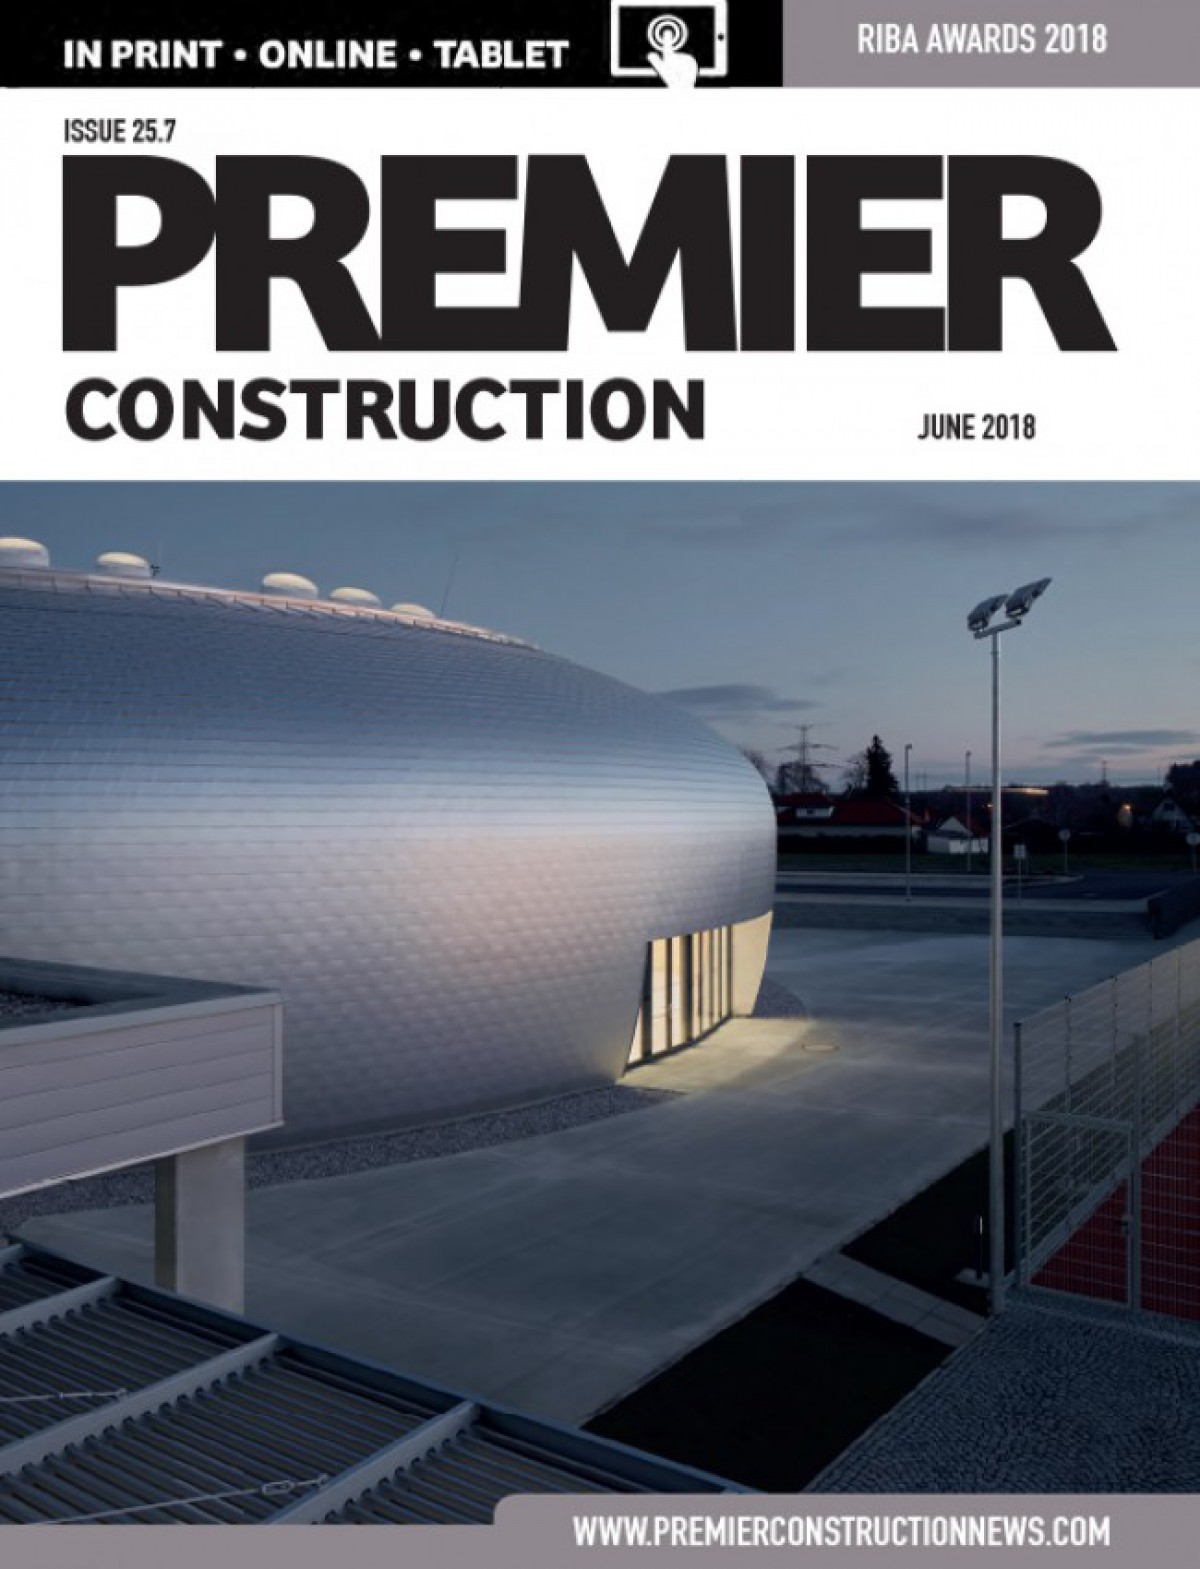 StromArchitects PremierConstructionCover2018a